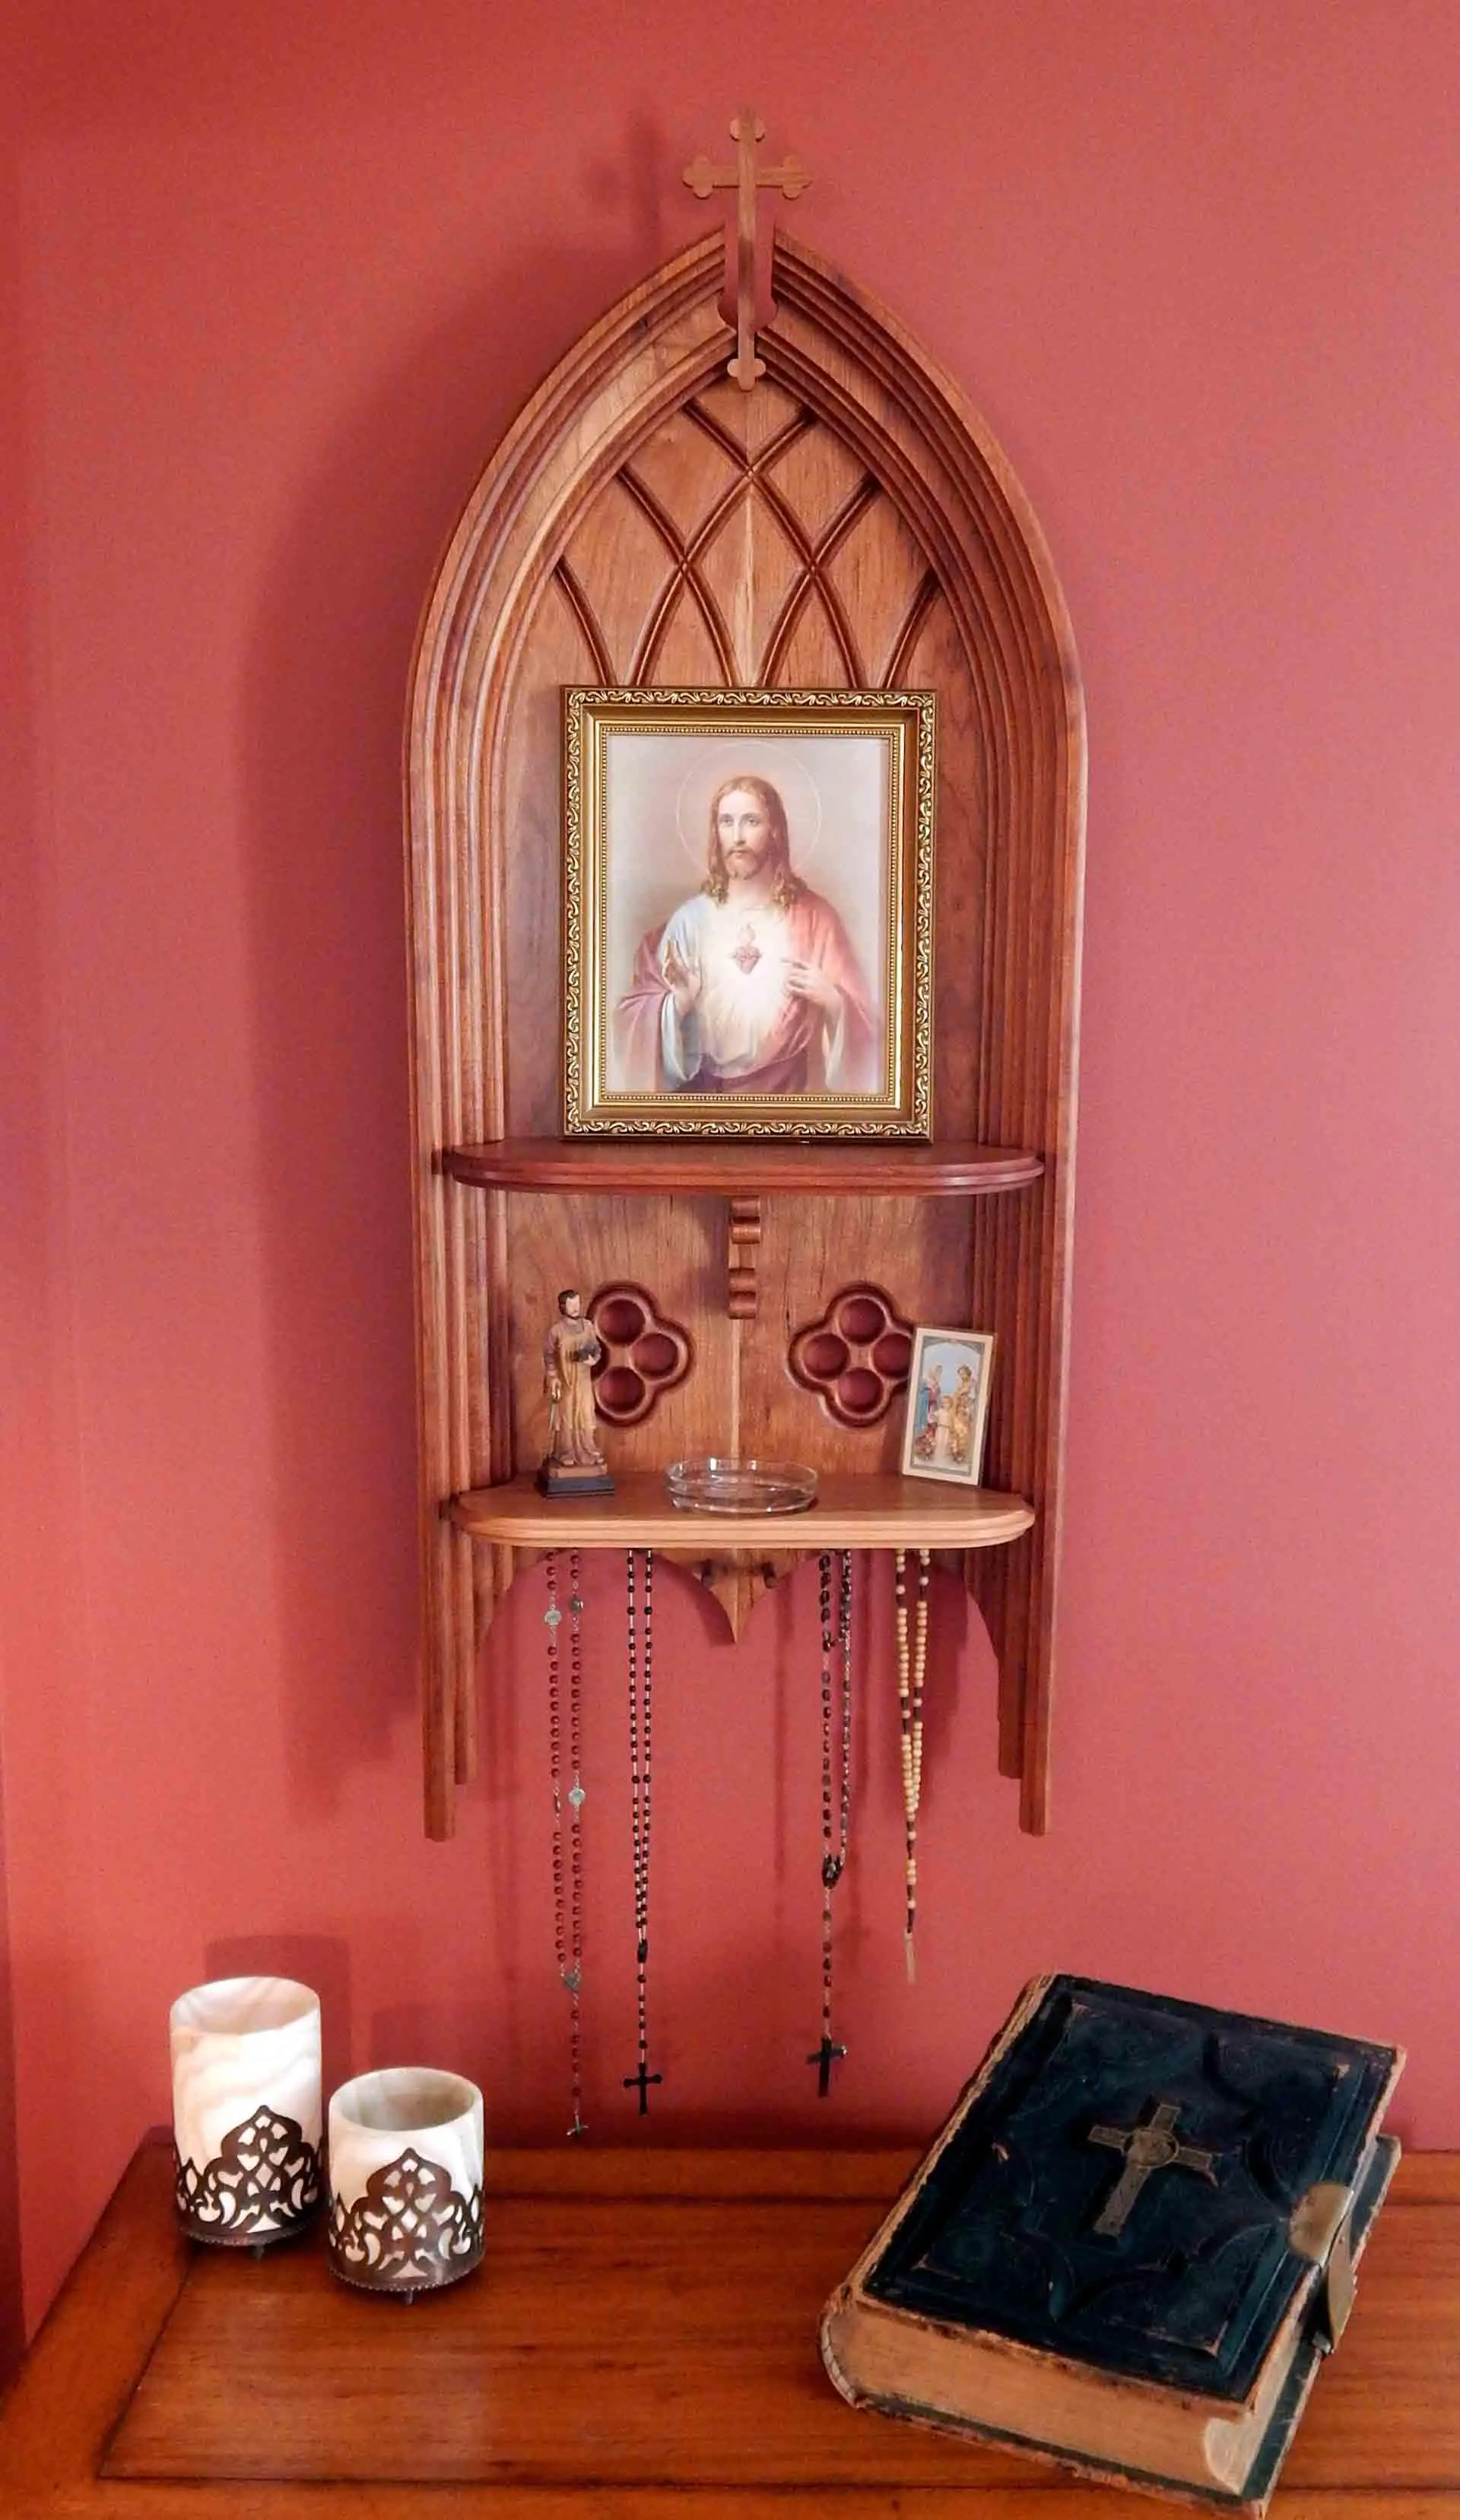 Christian home d?cor using religious trinkets